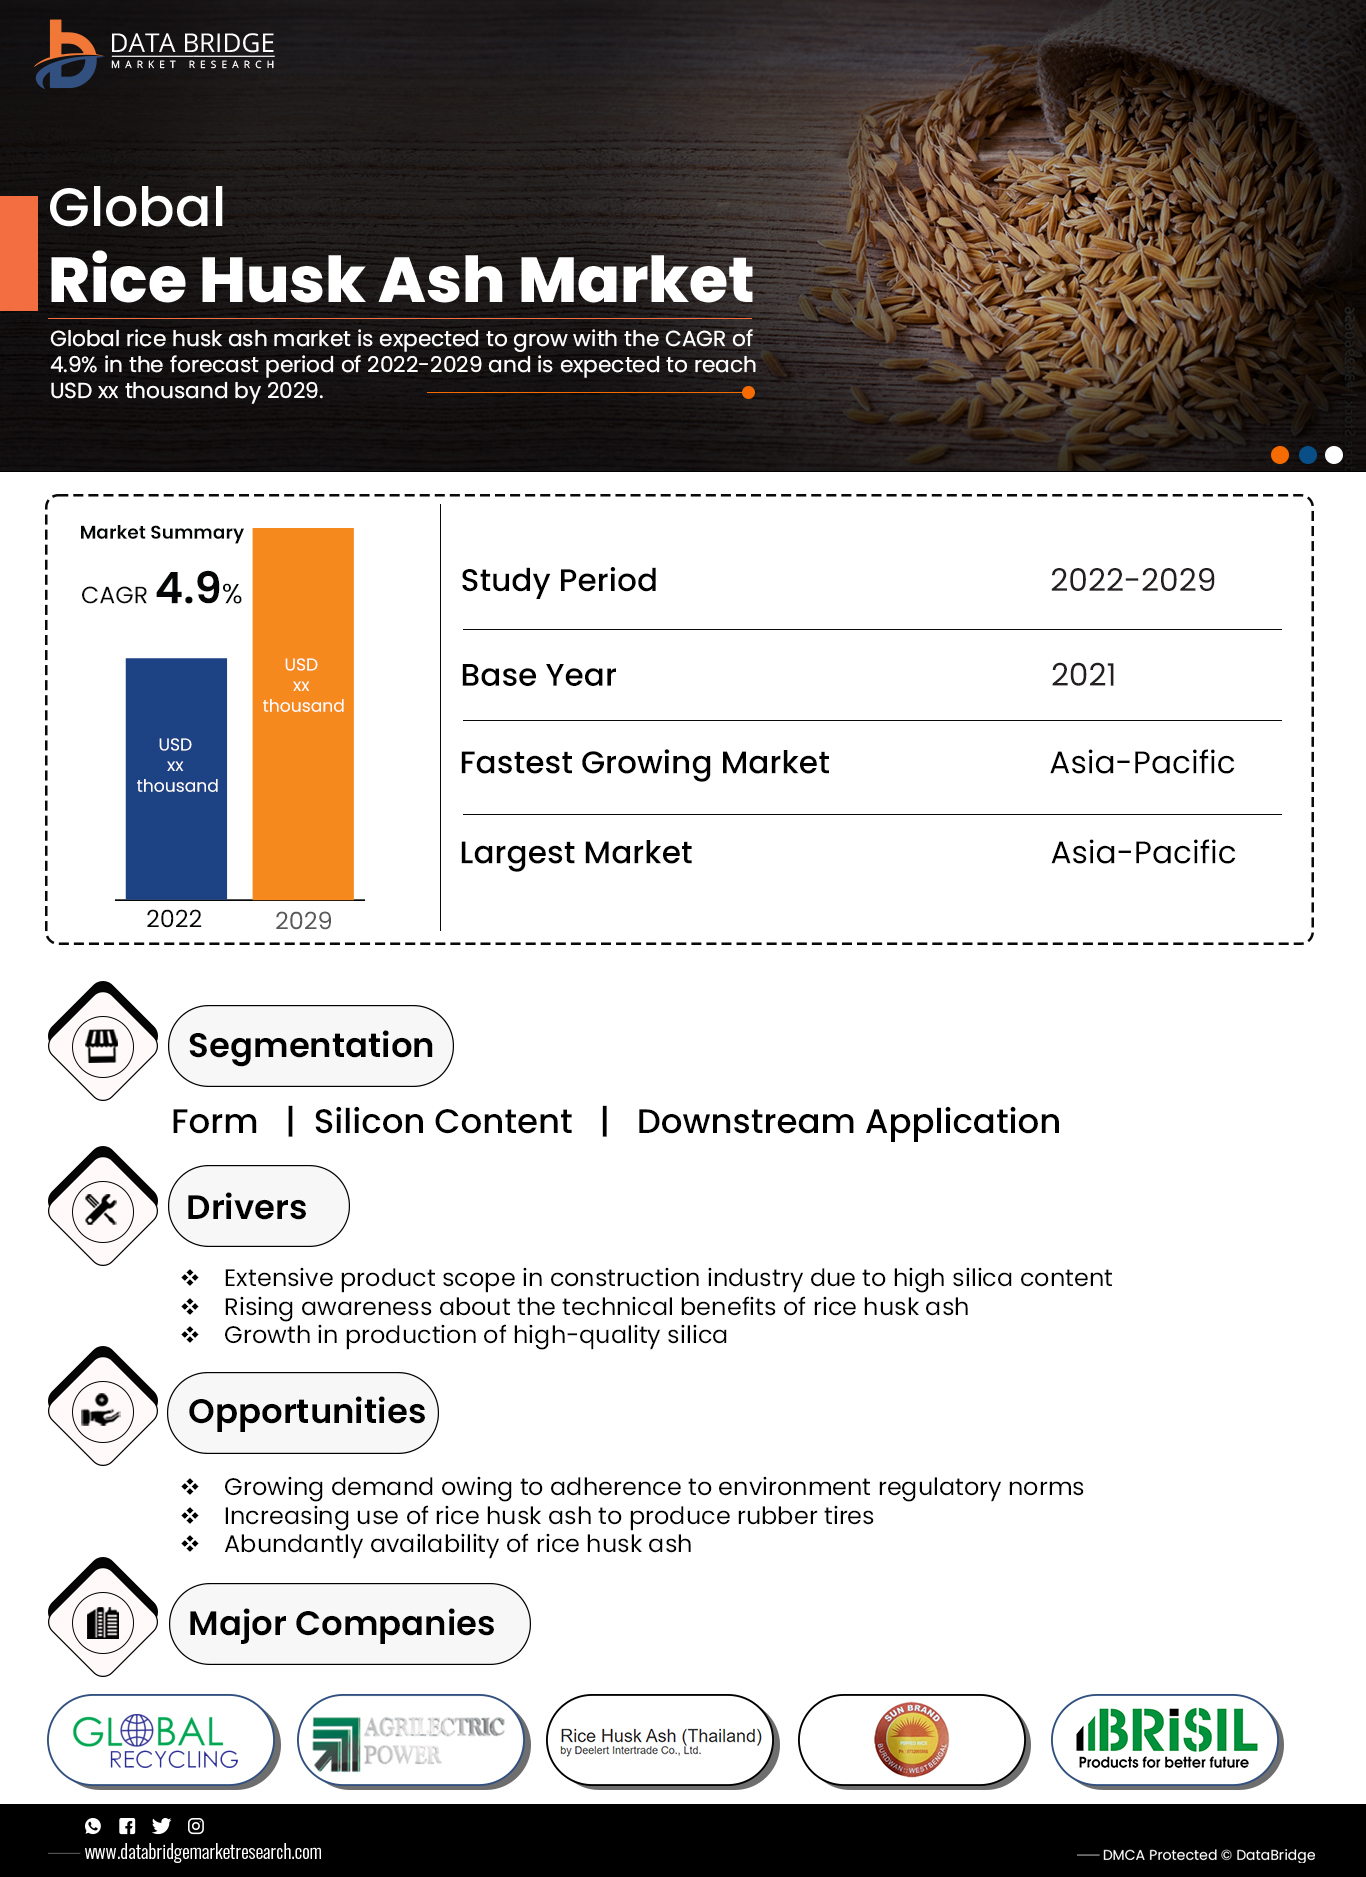 Rice Husk Ash Market